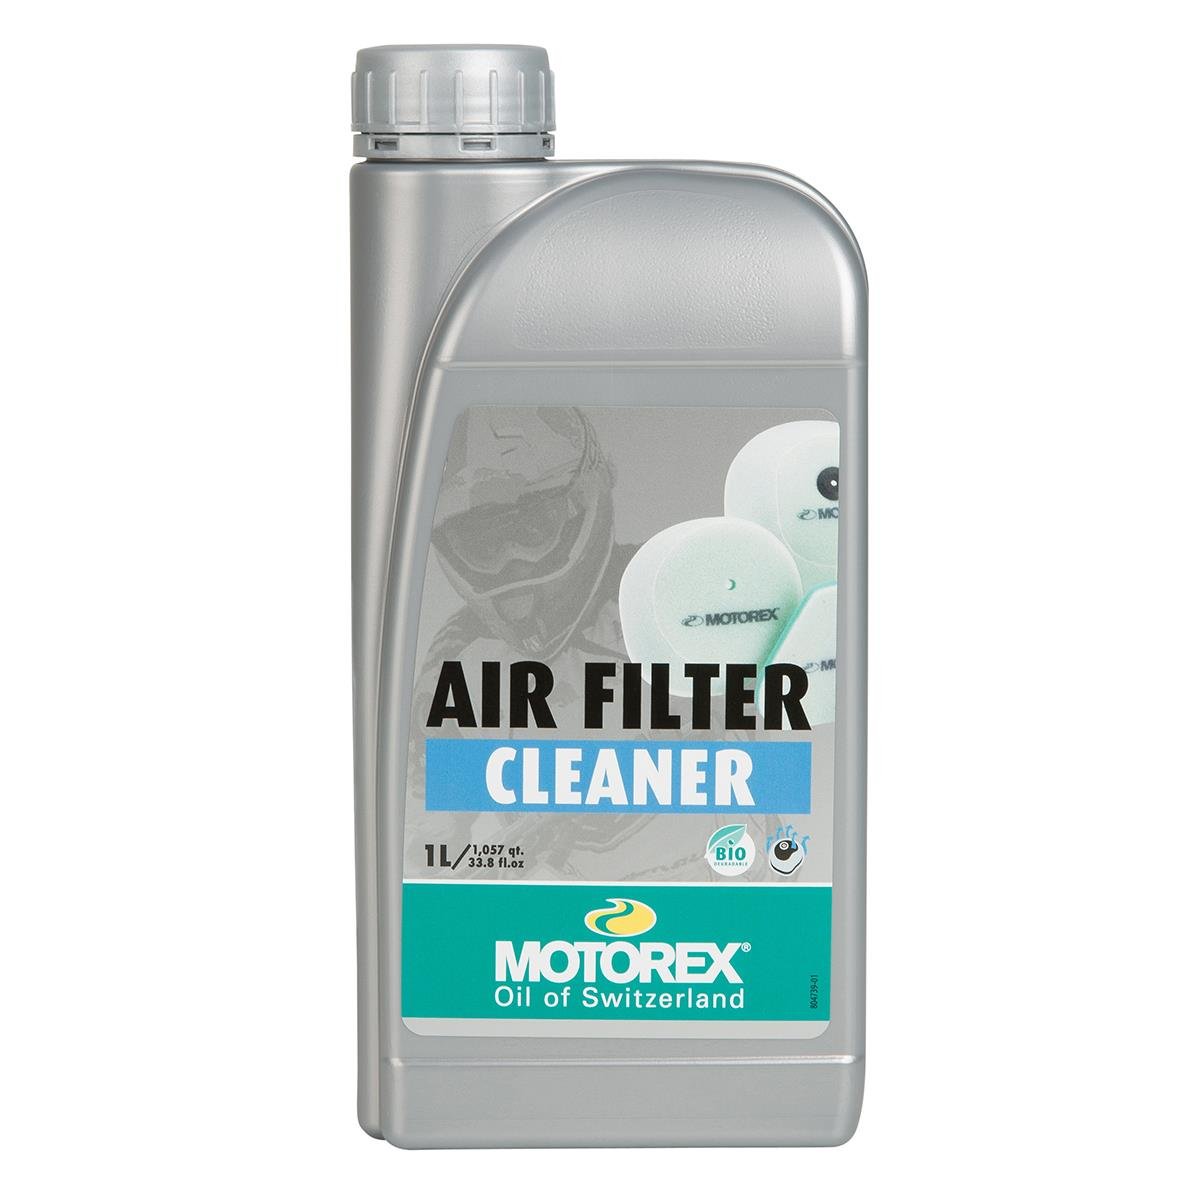 https://www.maciag-offroad.de/shop/artikelbilder/normal/139095/motorex-luftfilterreiniger-air-filter-cleaner-1.jpg